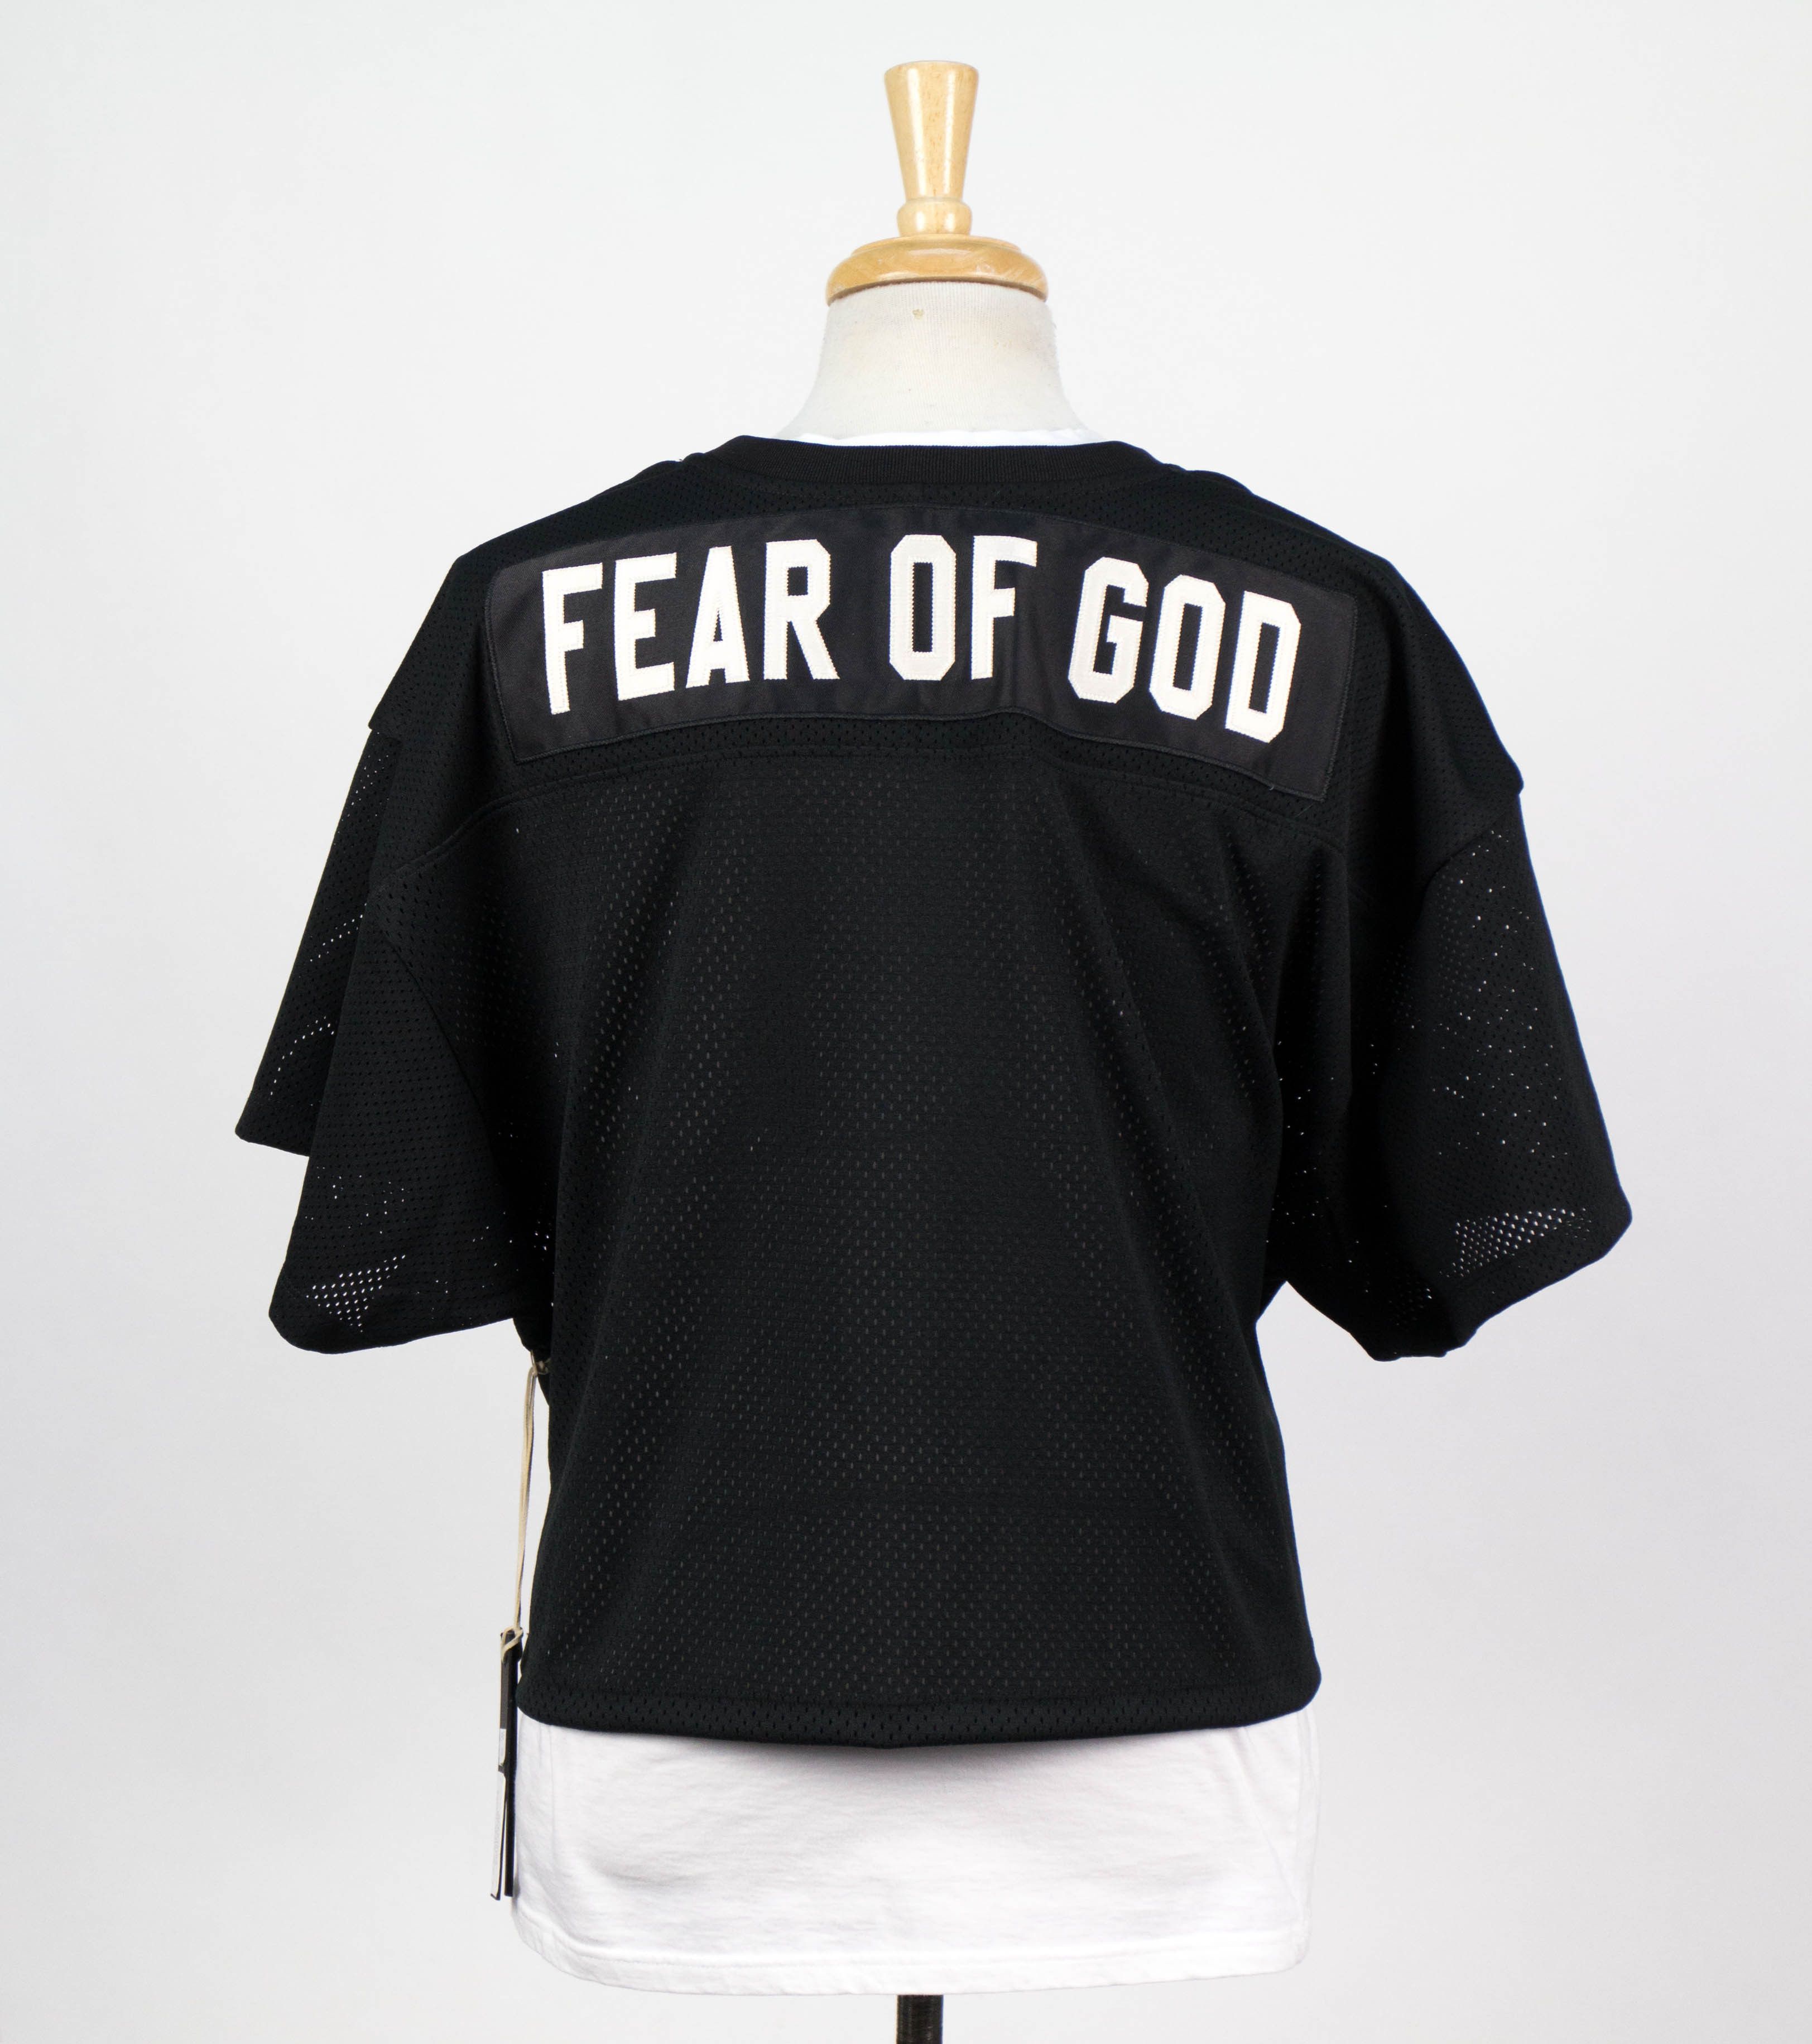 FEAR OF GOD MESH FOOTBALL JERSEY 5th | tradexautomotive.com